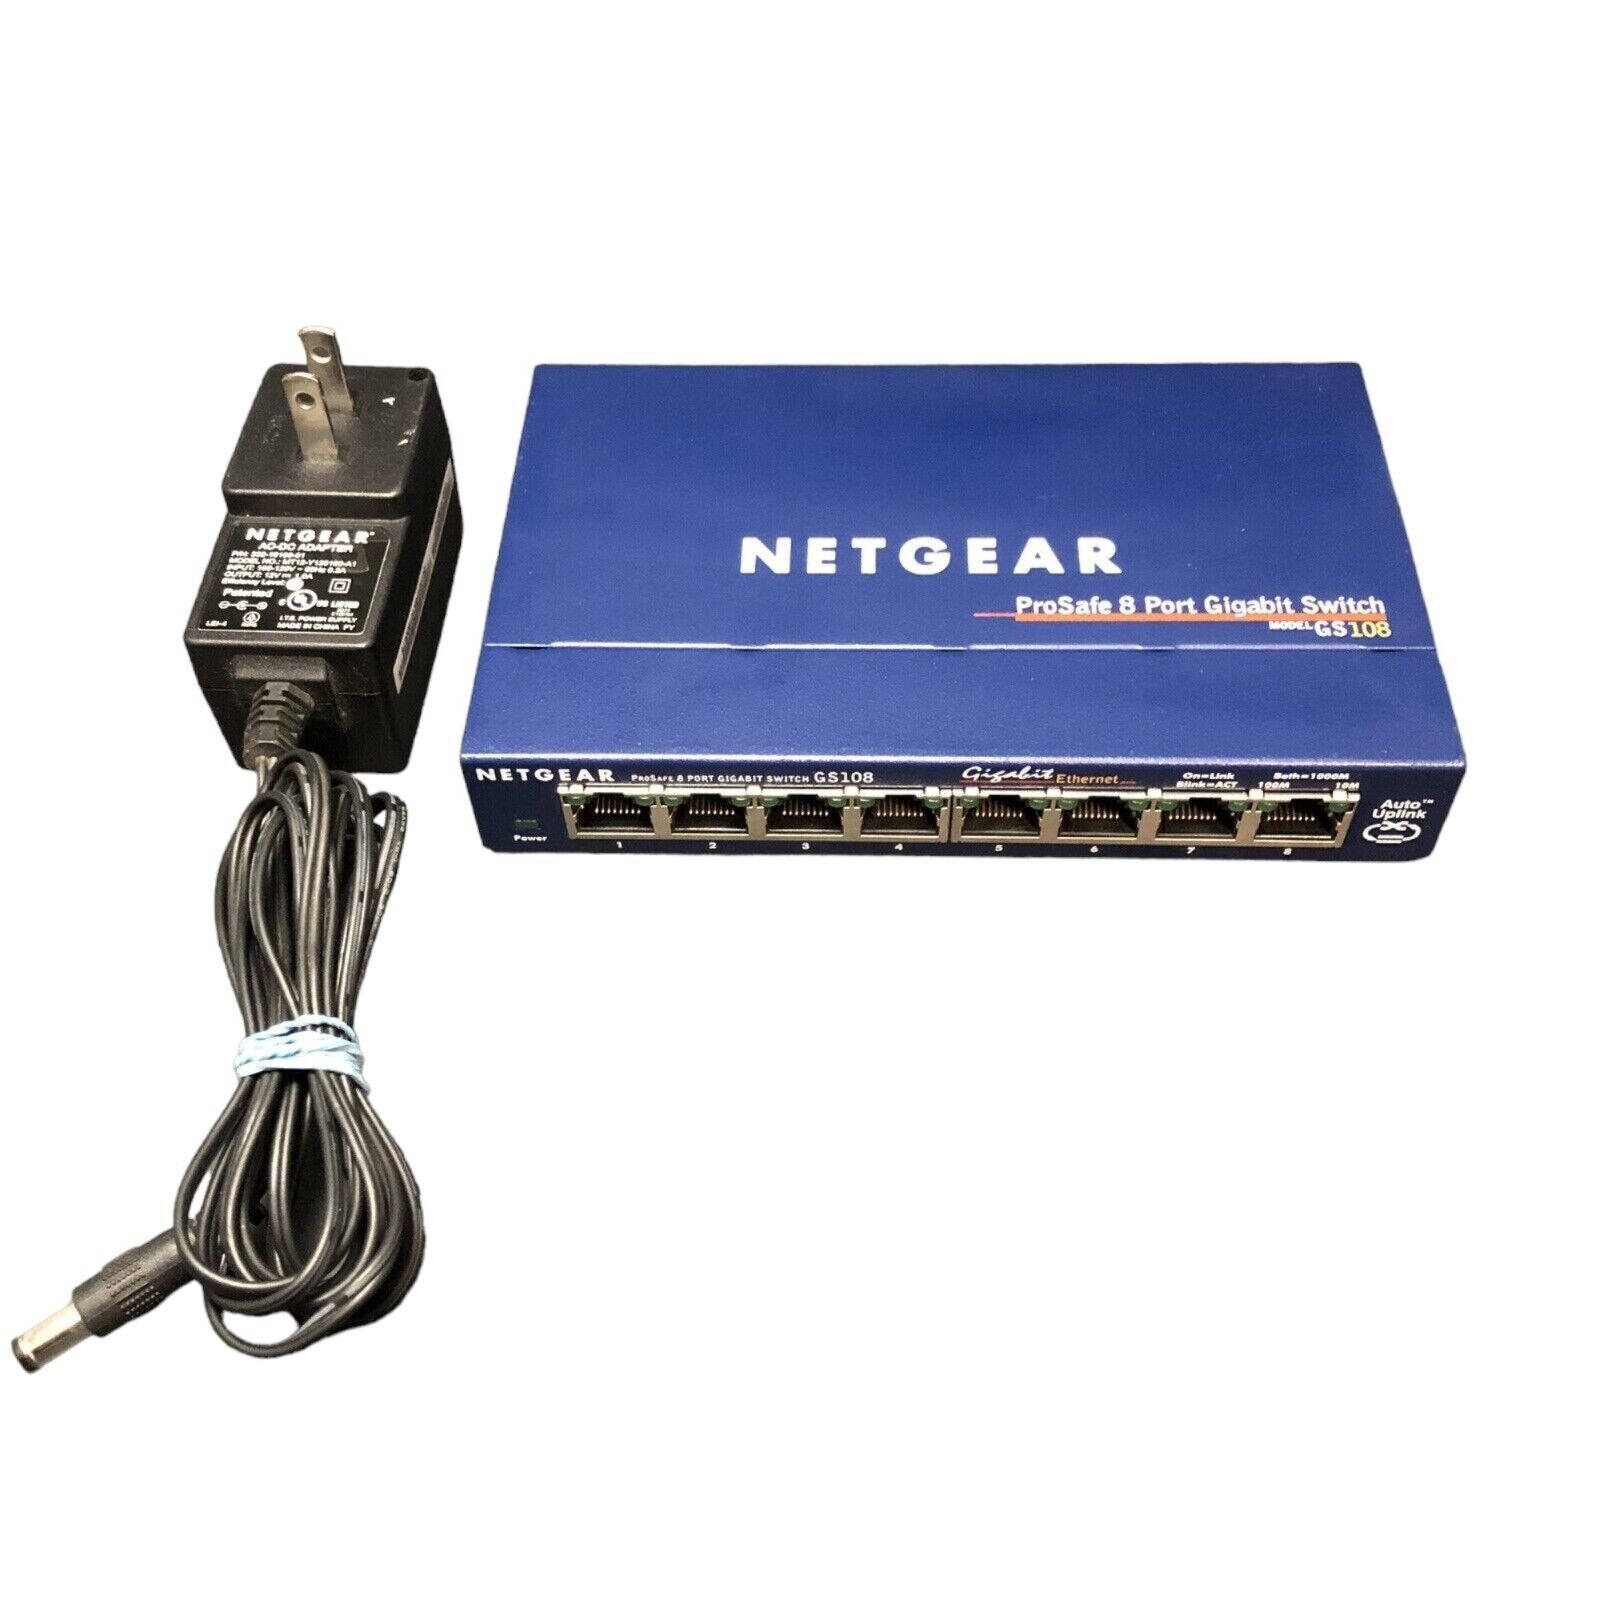 NETGEAR Prosafe GS108 V3 8 Port Gigabit Ethernet Switch WITH POWER SUPPLY